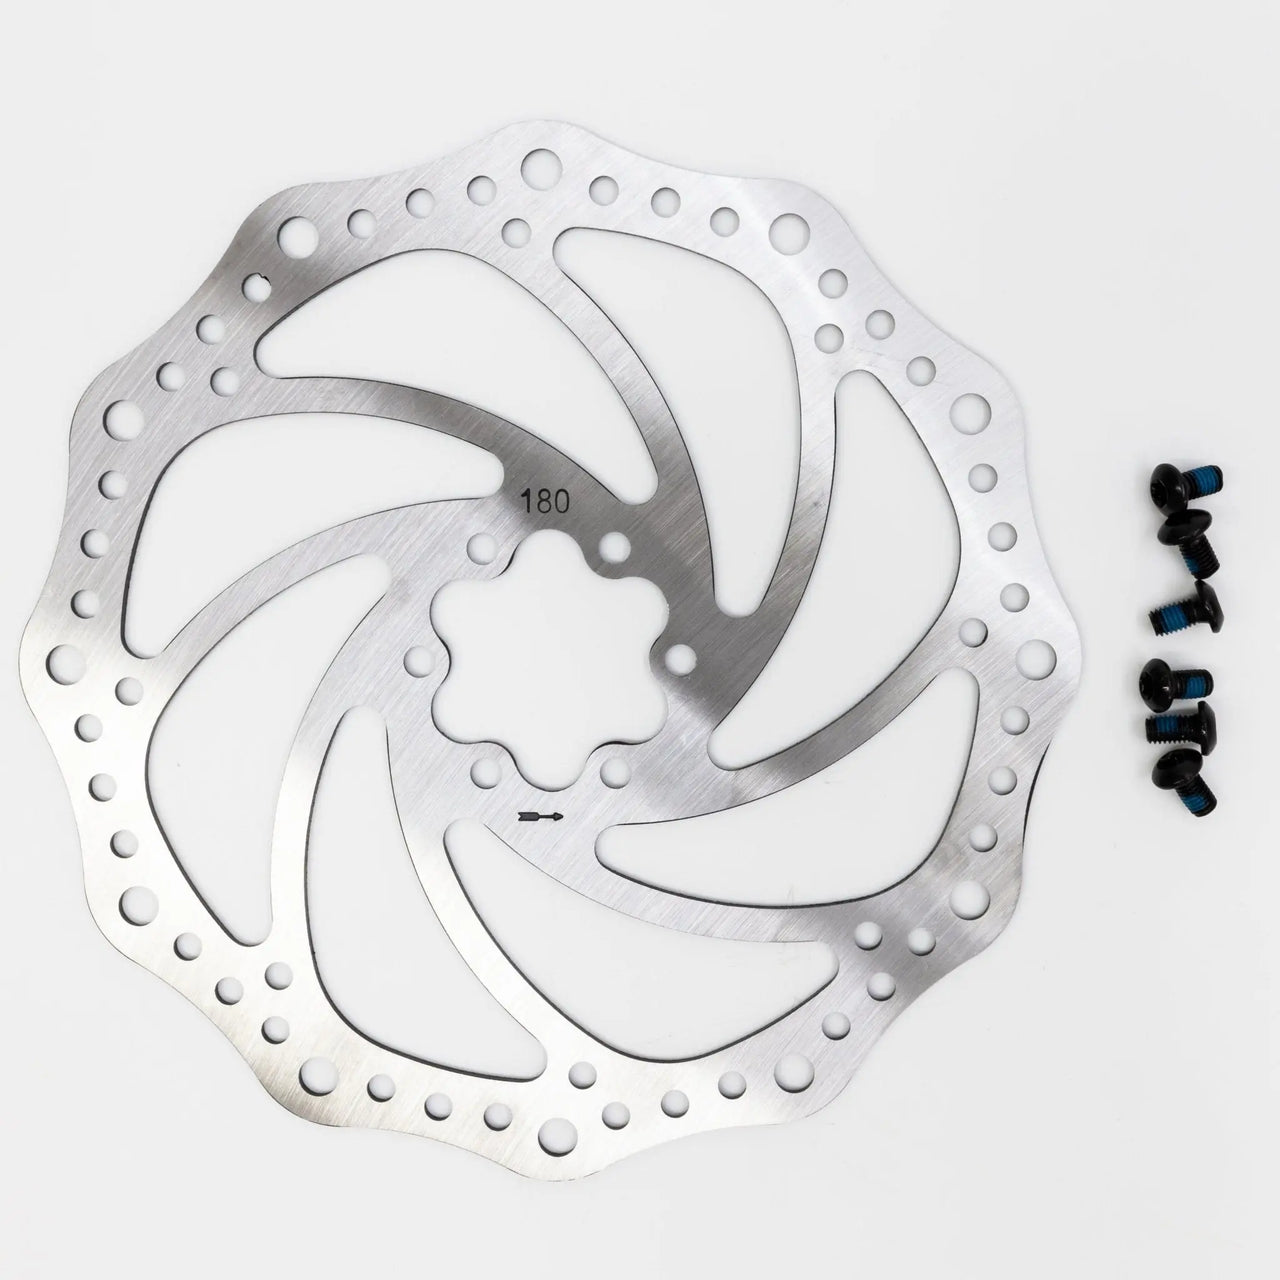 Mountain Bike brake rotor Pro 180mm MTB disc - Air BikeBicycle Brake Rotors